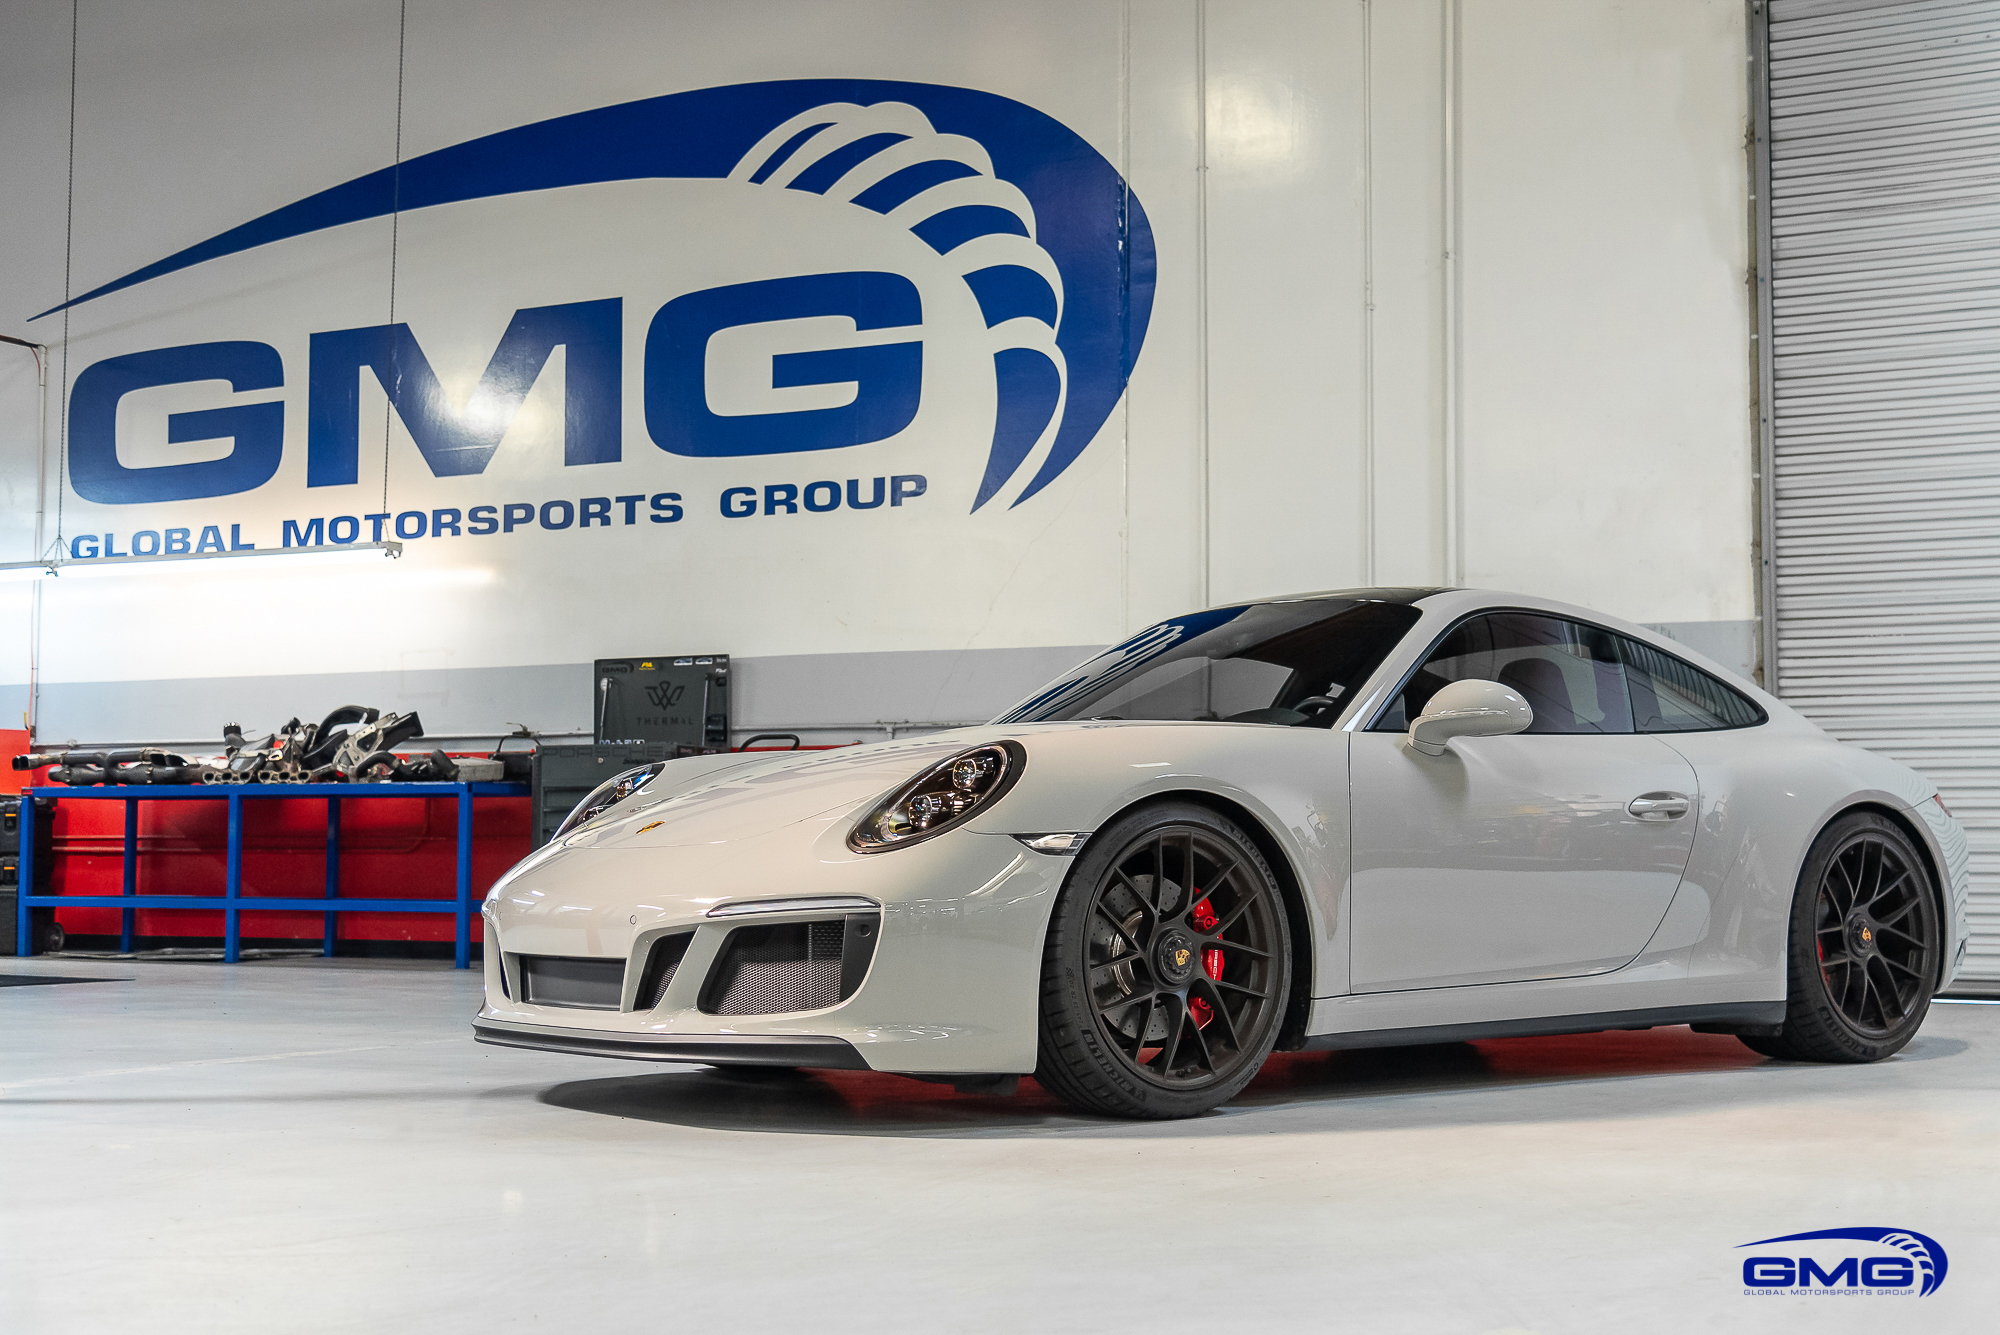 Chalk Porsche  Carrera GTS - GMG Racing